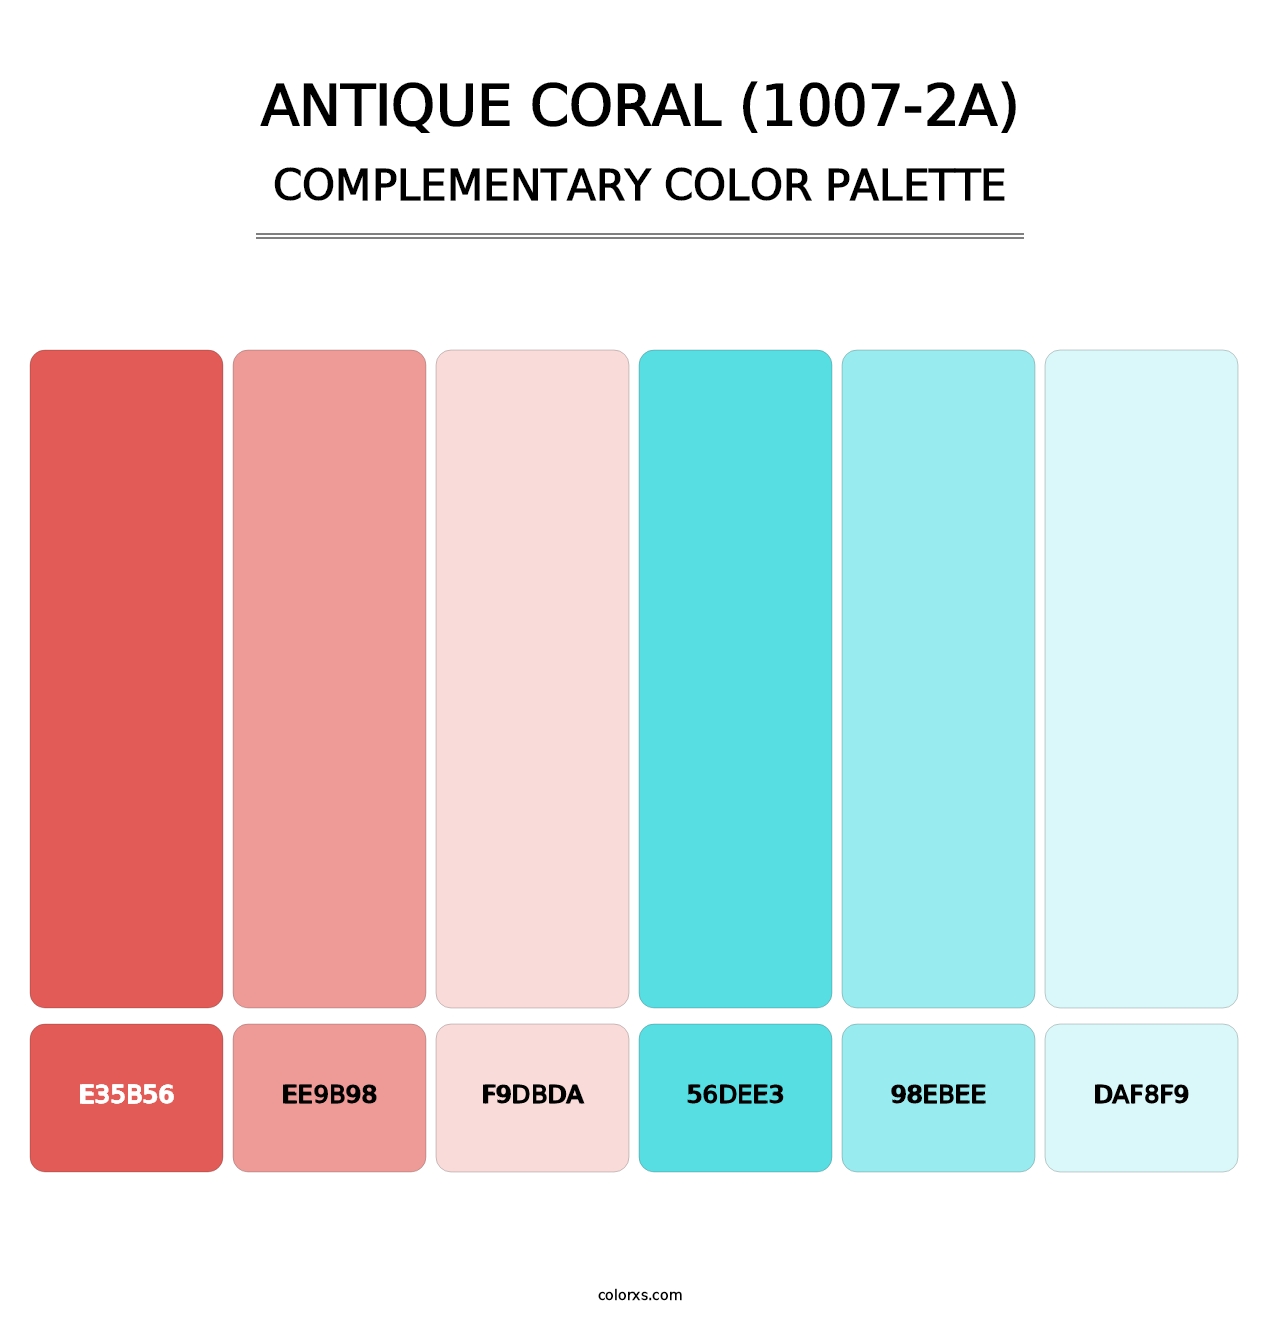 Antique Coral (1007-2A) - Complementary Color Palette